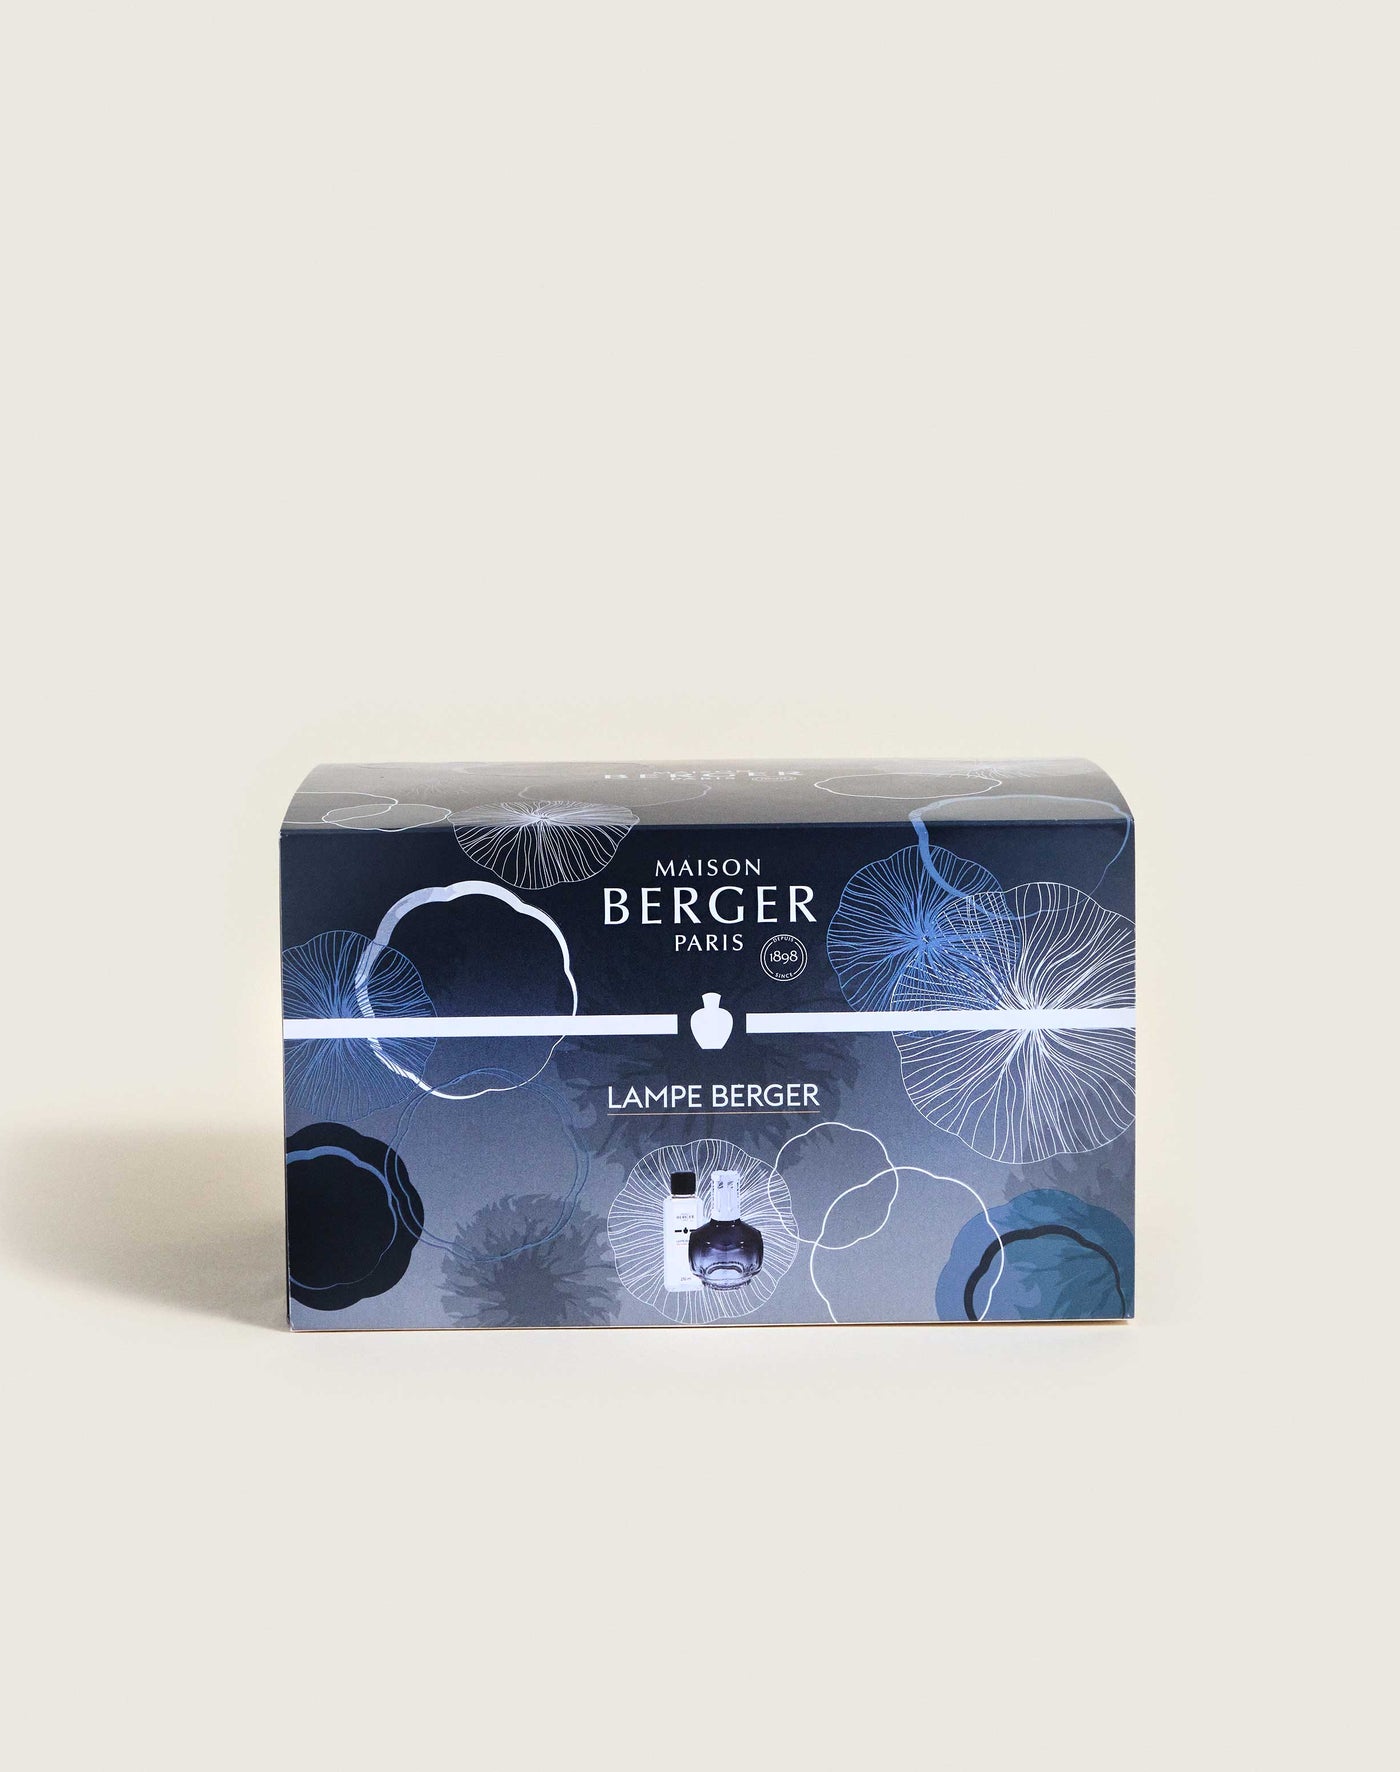 Midnight Blue Molecule Lamp Berger Gift Pack